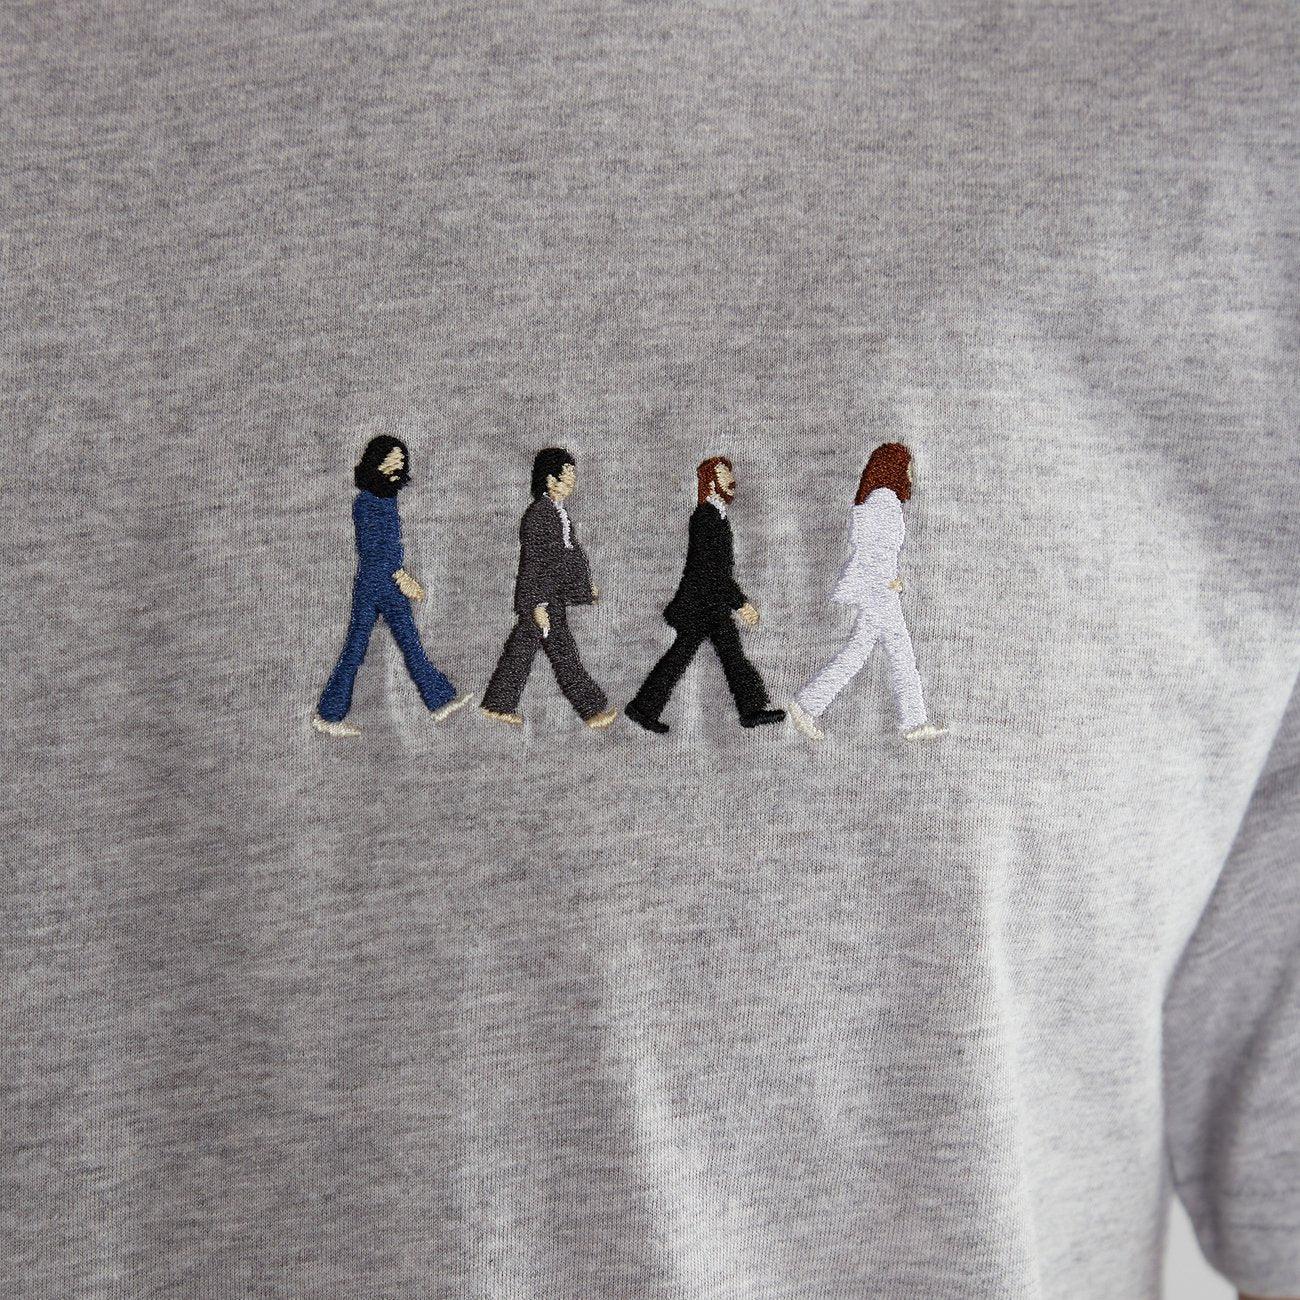 T-shirt Stockholm Abbey Road Embroidery Grey Melange - ECRU